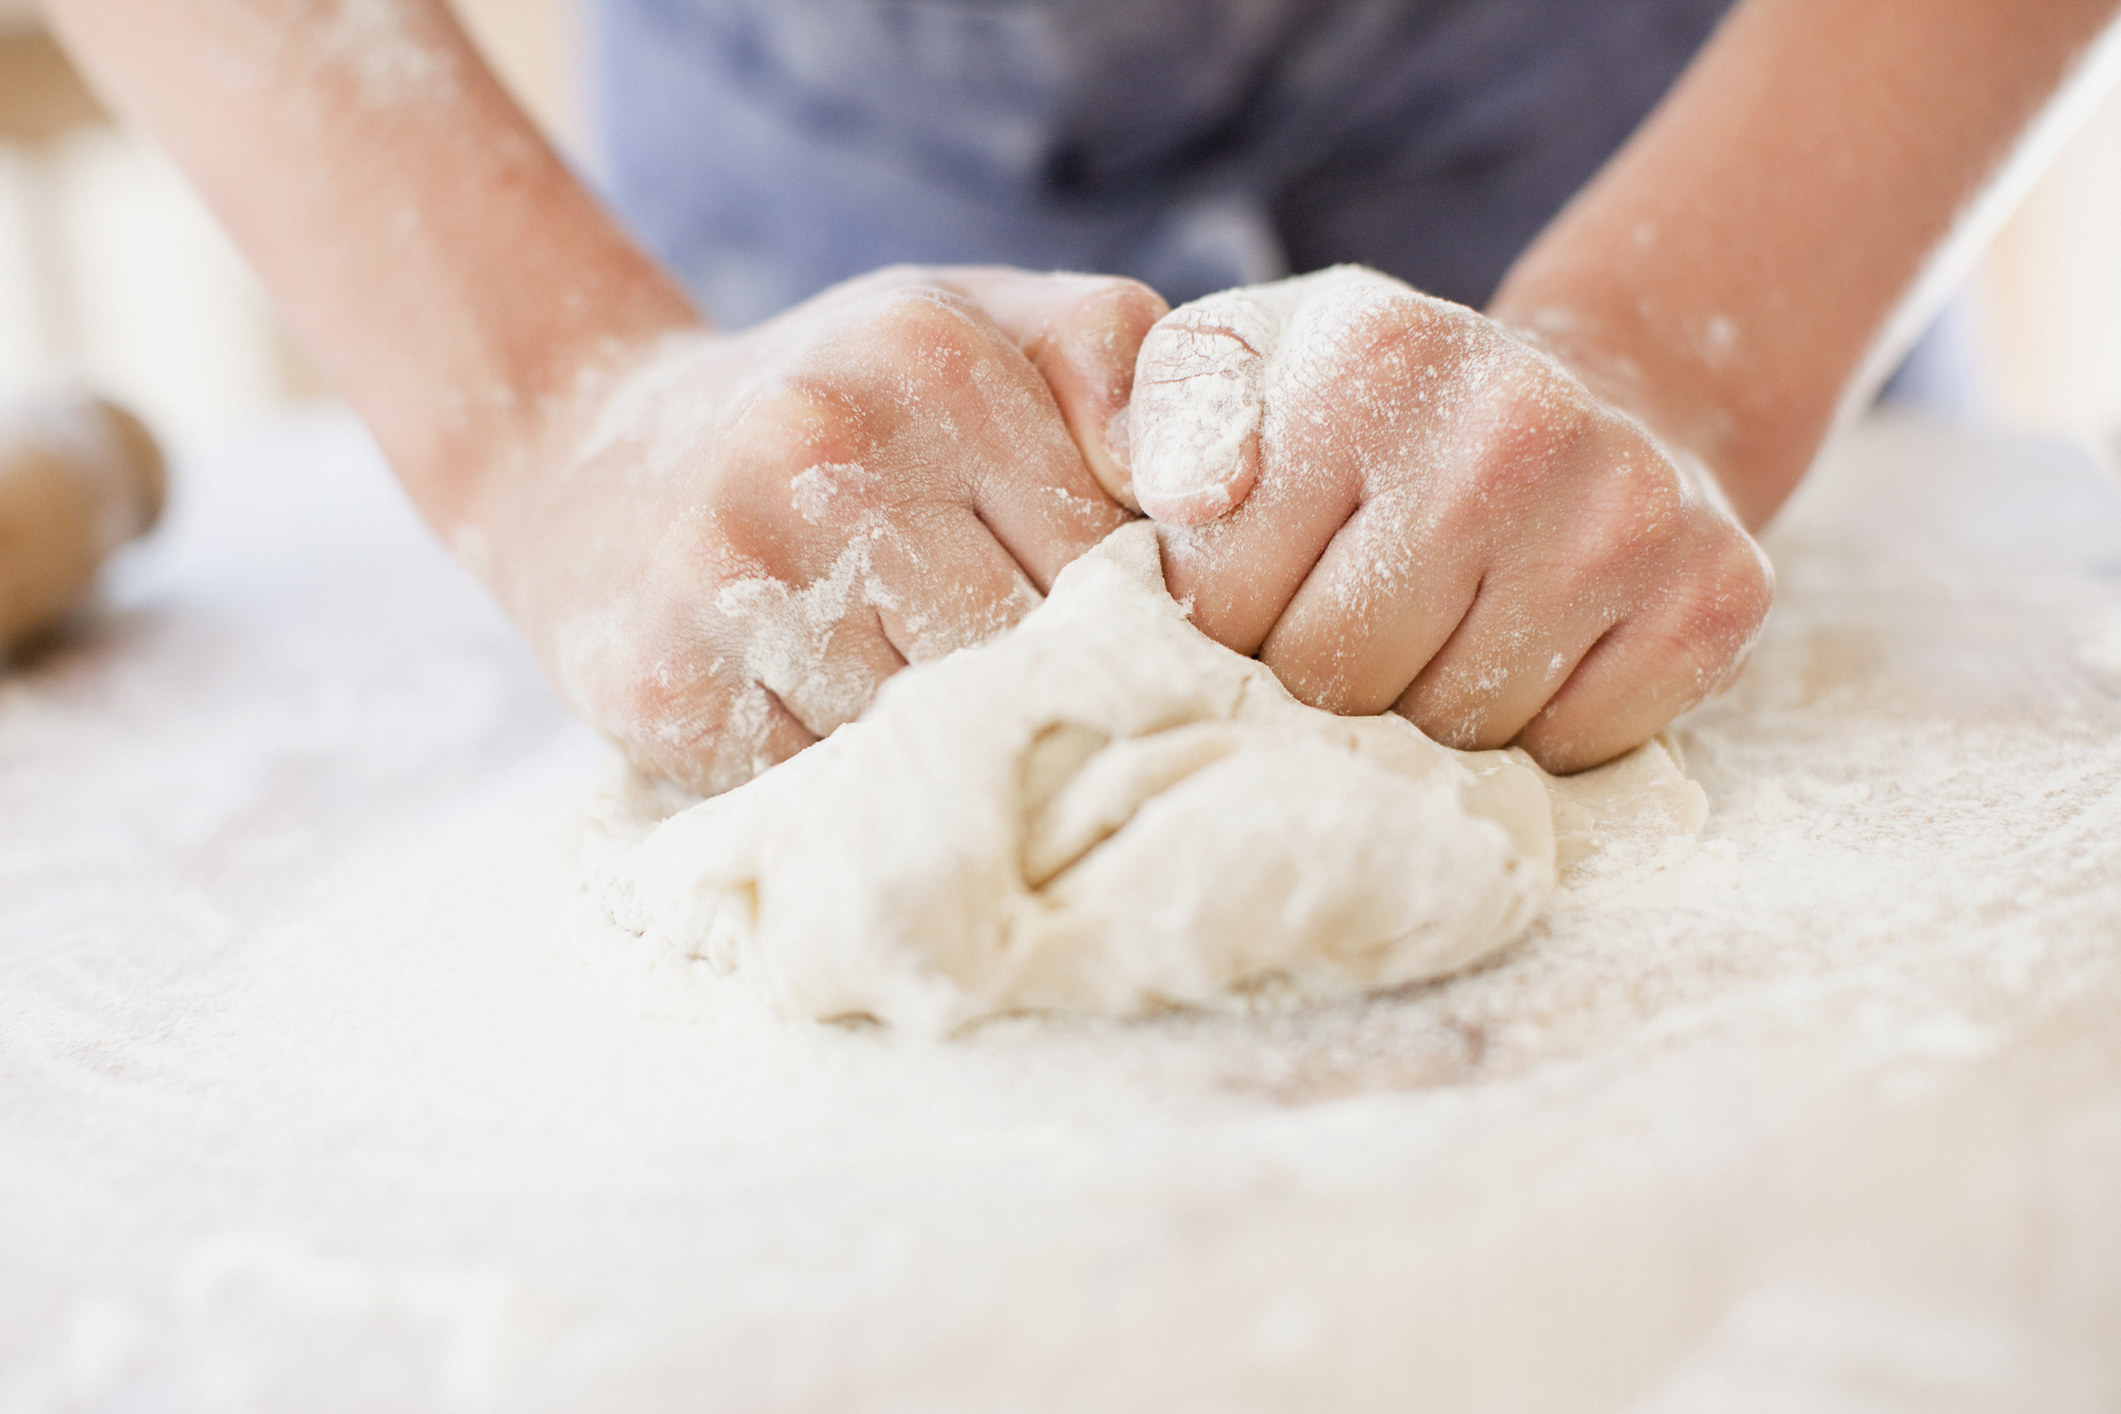 A woman kneading dough.